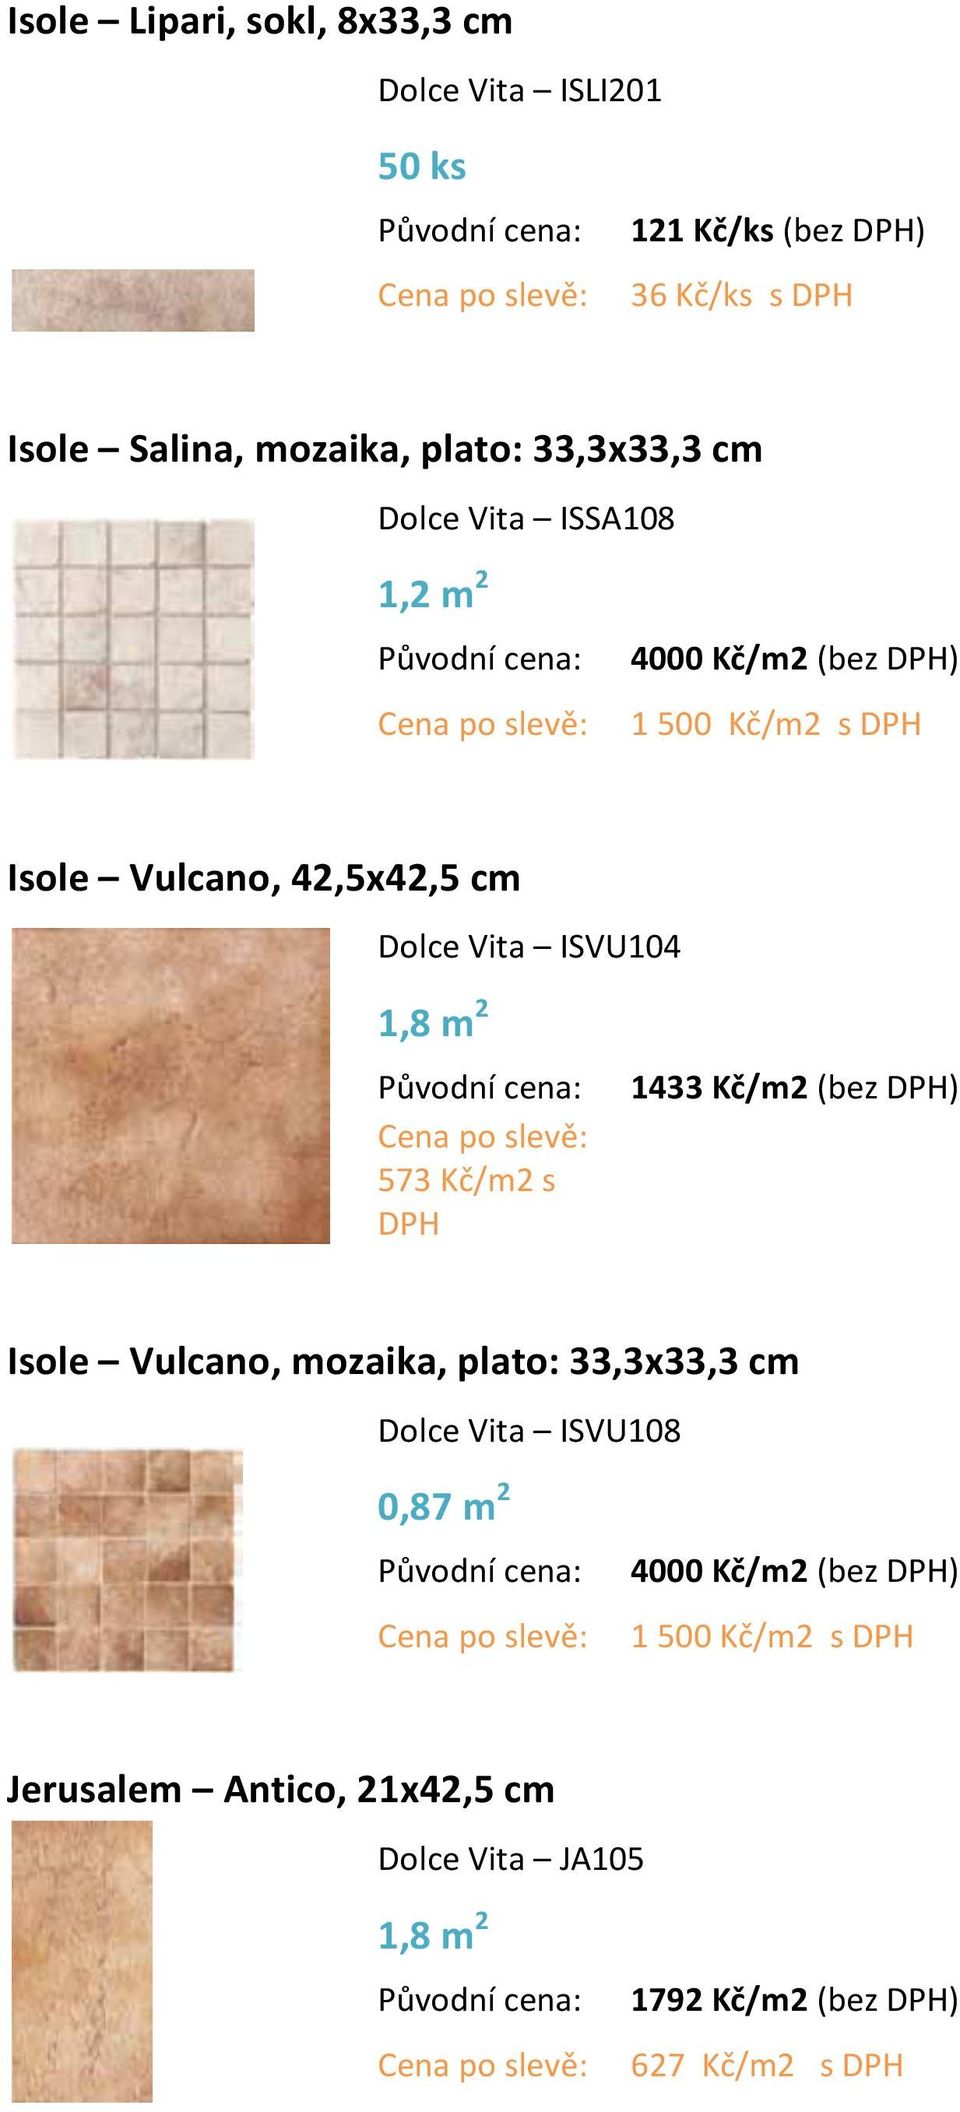 ISVU104 1,8 m 2 573 Kč/m2 s DPH 1433 Kč/m2 (bez DPH) Isole Vulcano, mozaika, plato: 33,3x33,3 cm Dolce Vita ISVU108 0,87 m